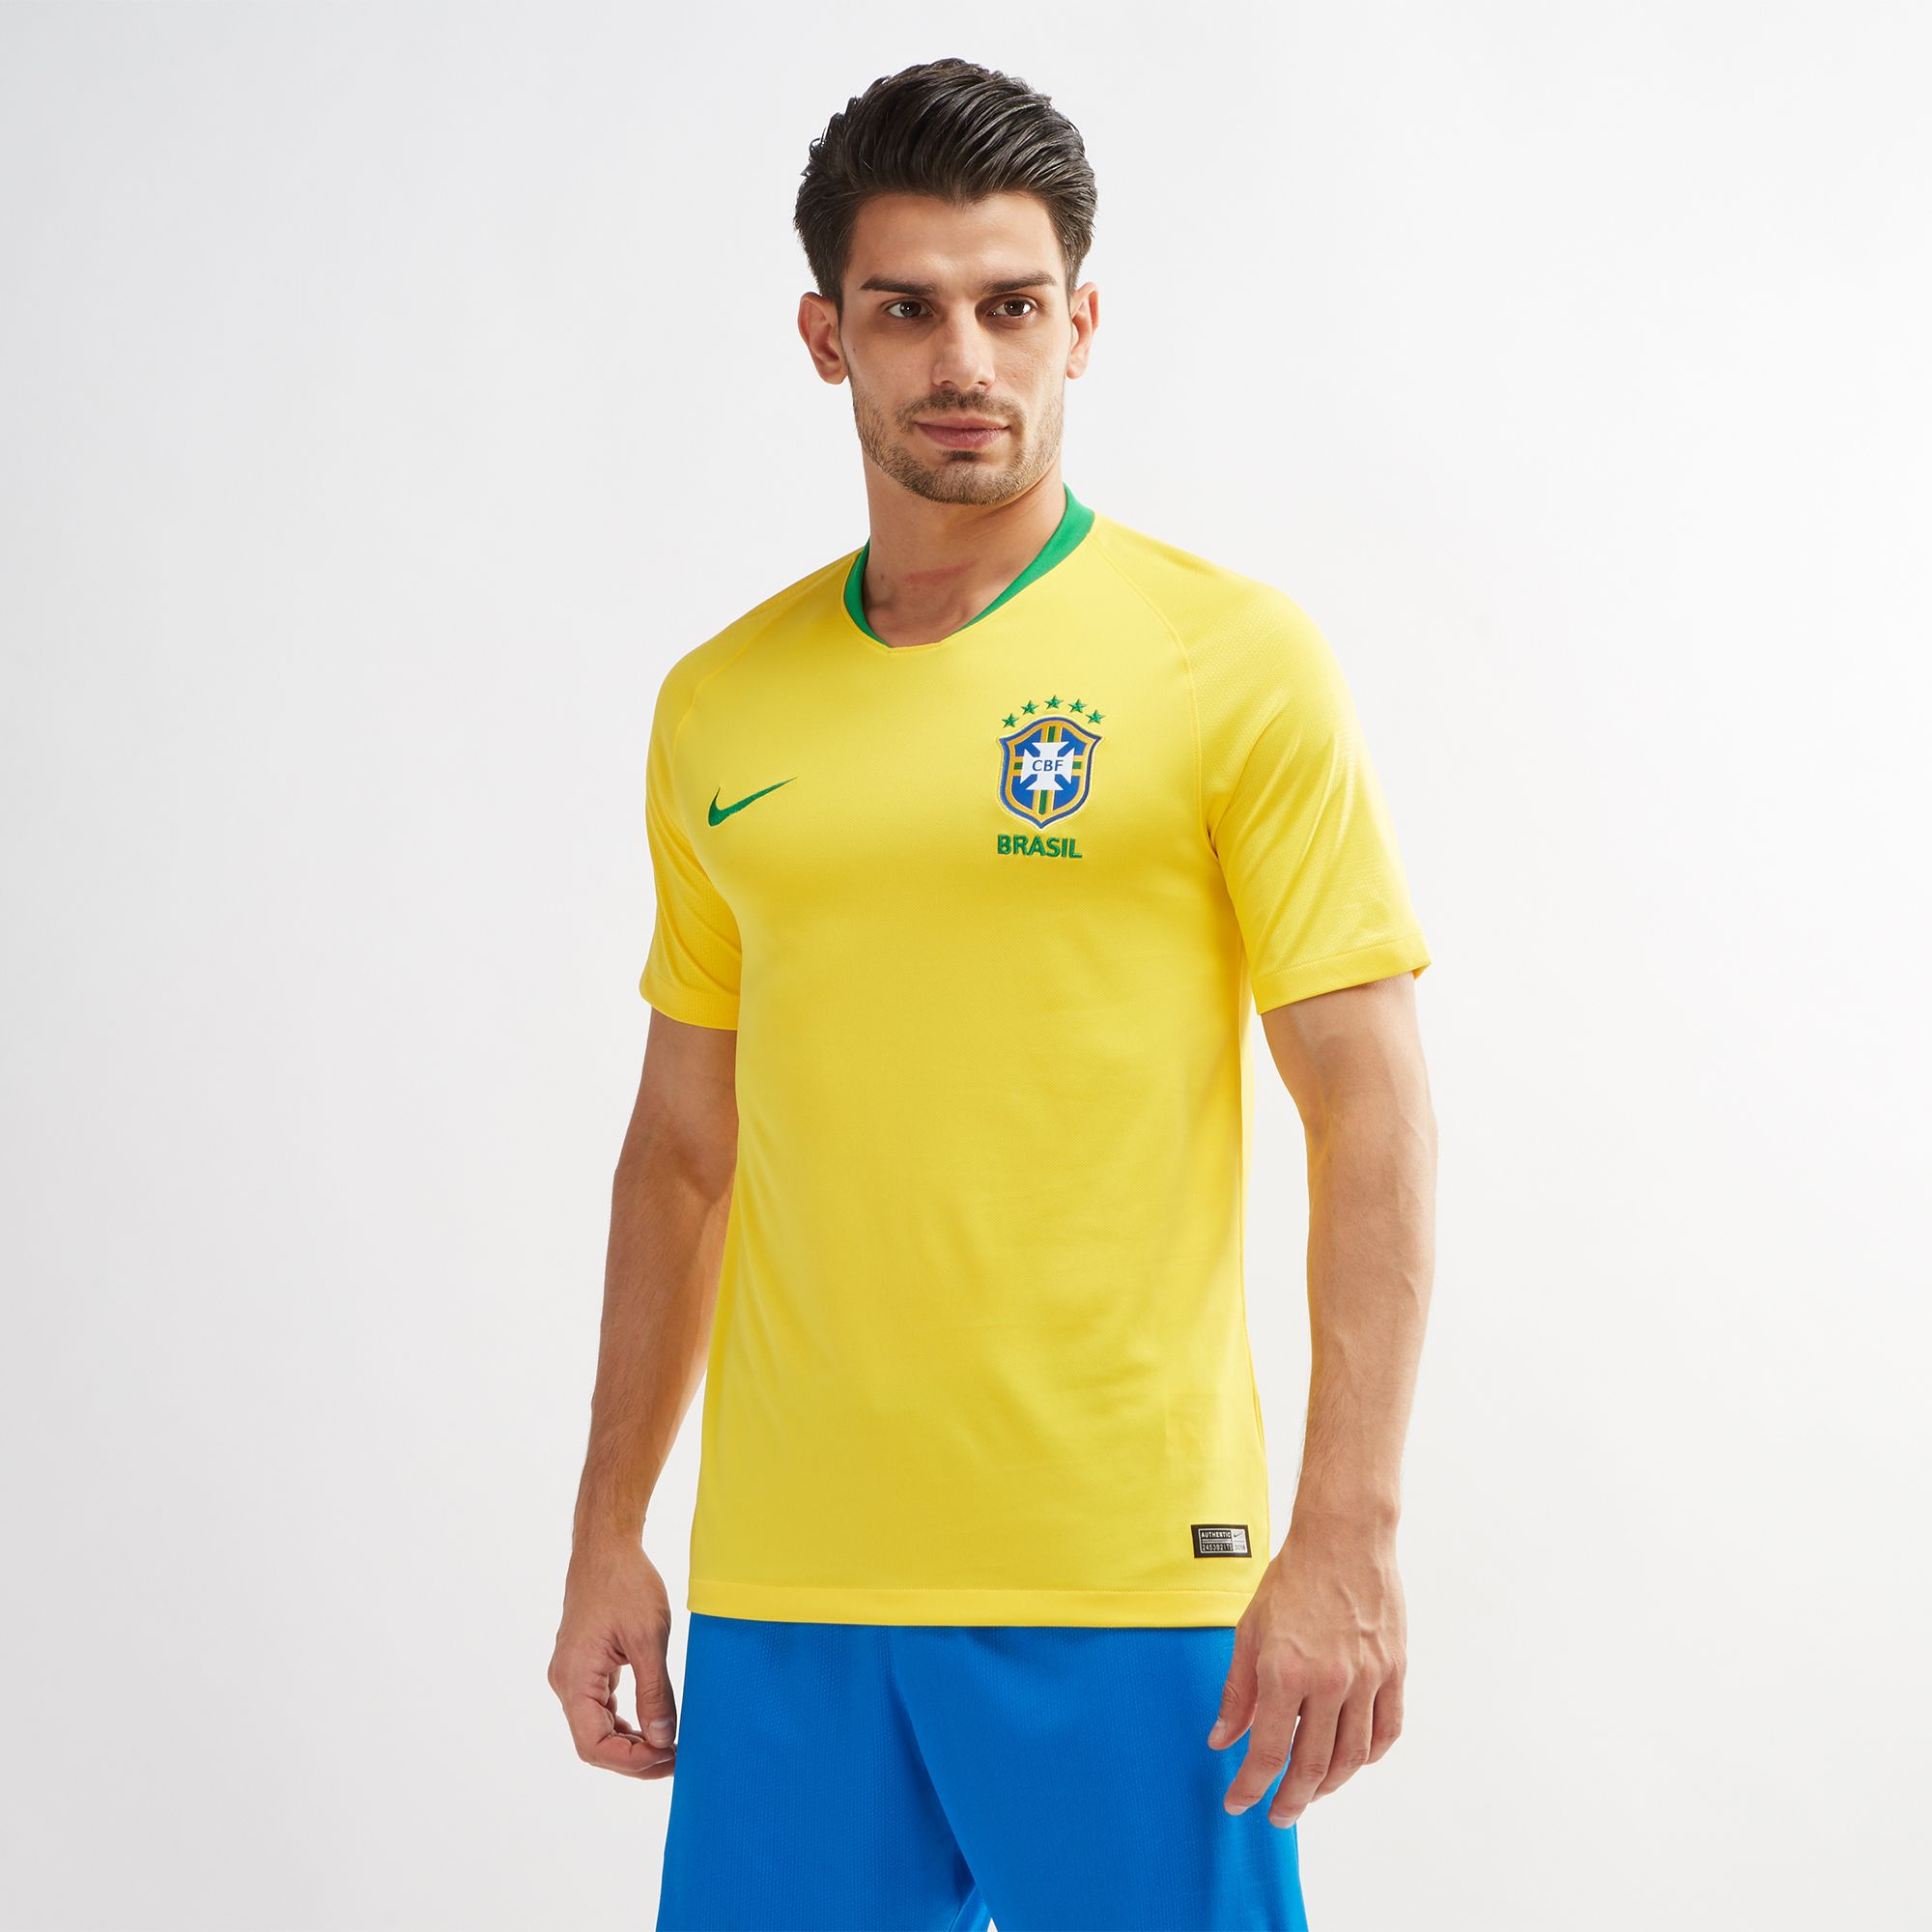 Nike CBF Brazil Home Stadium Jersey | Jerseys | Tops | Clothing | Men's ...